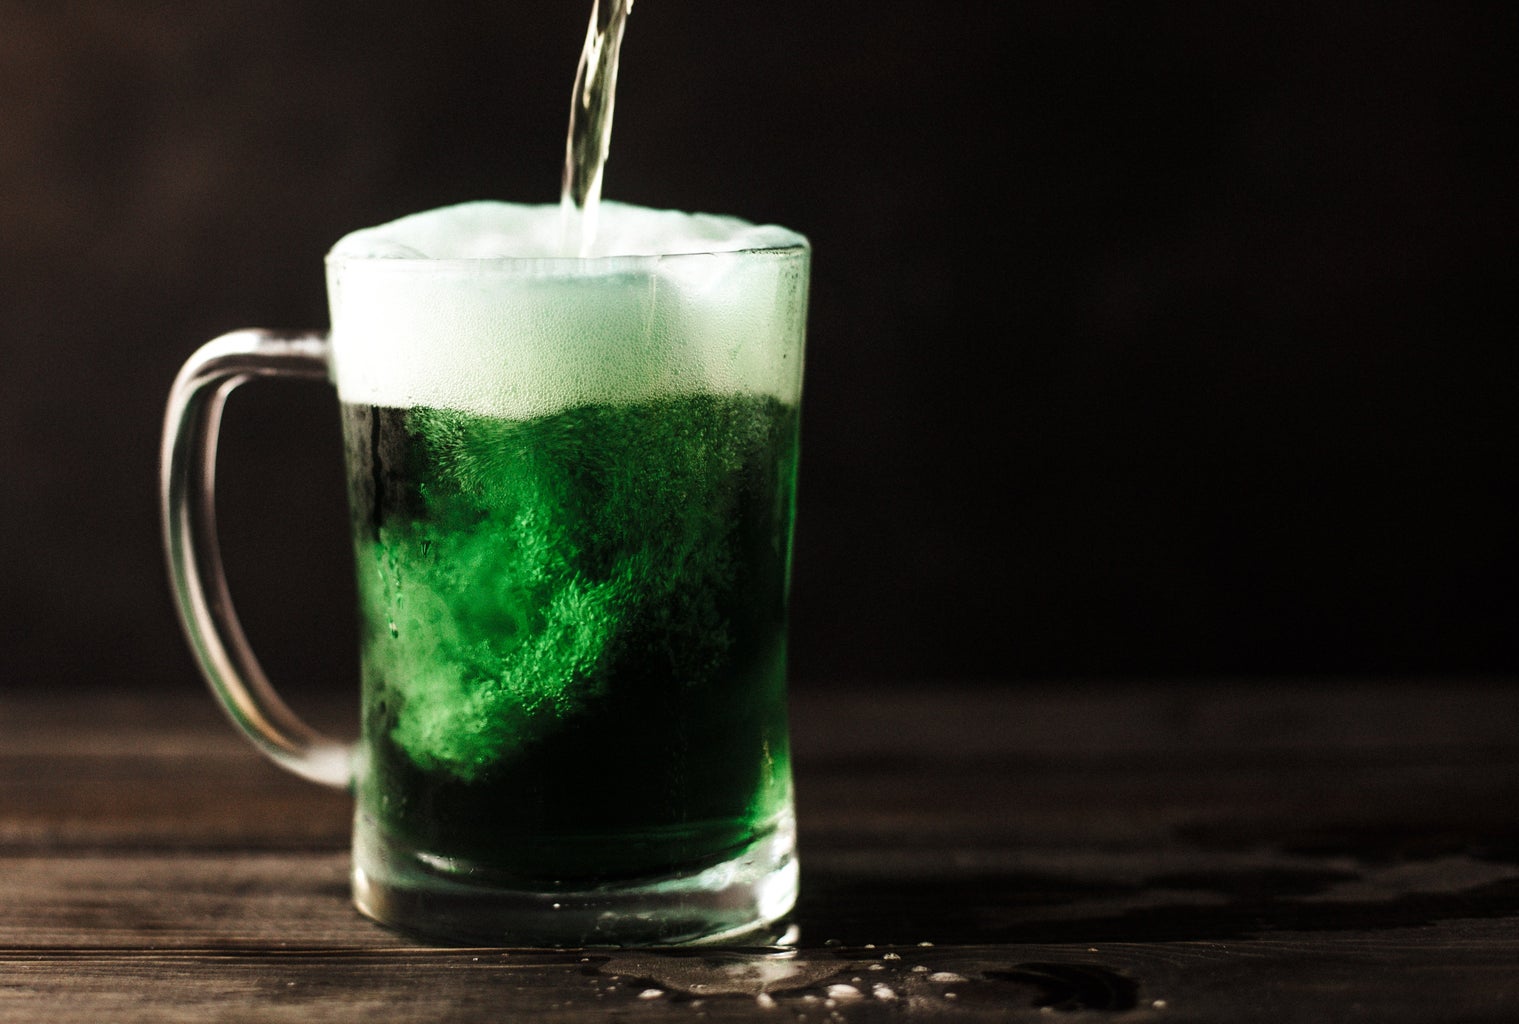 Green drink in a glass mug